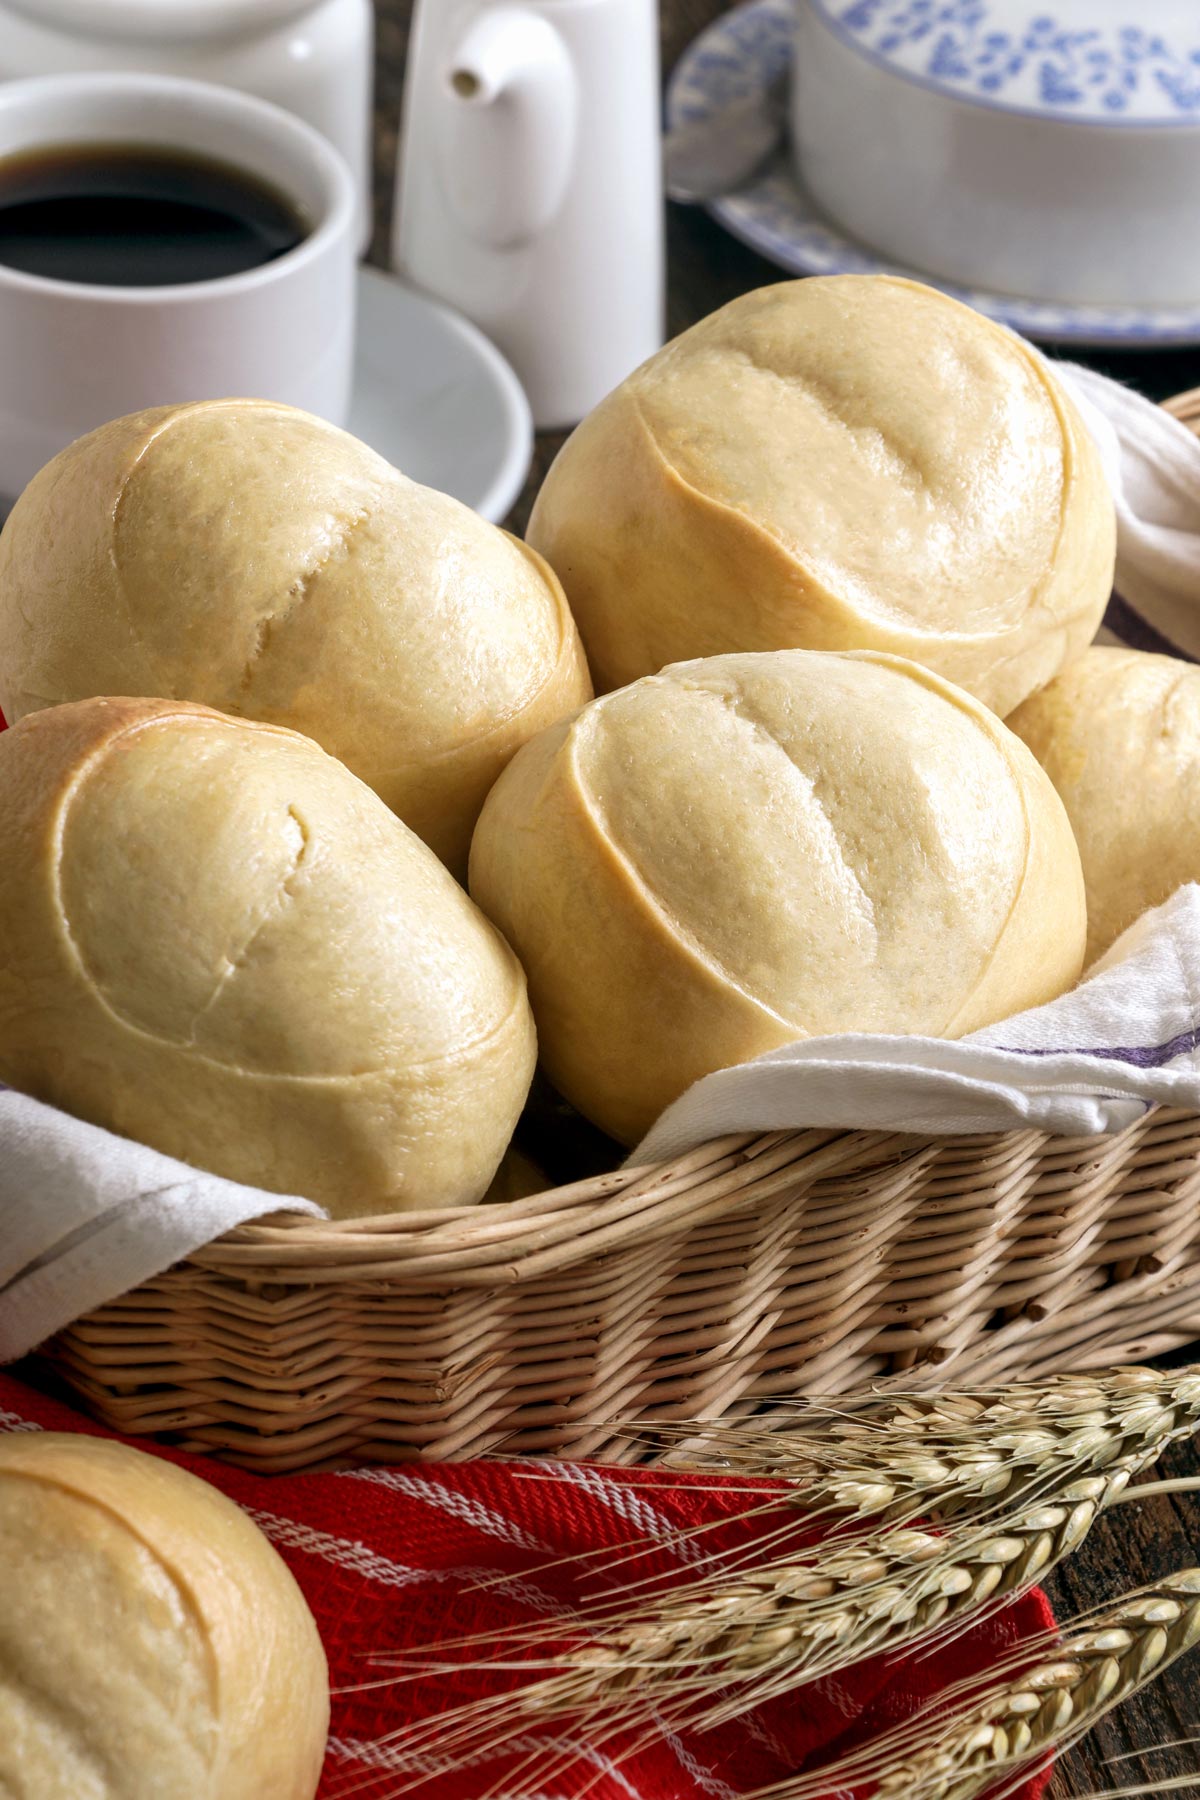 Monay in a bread basket.